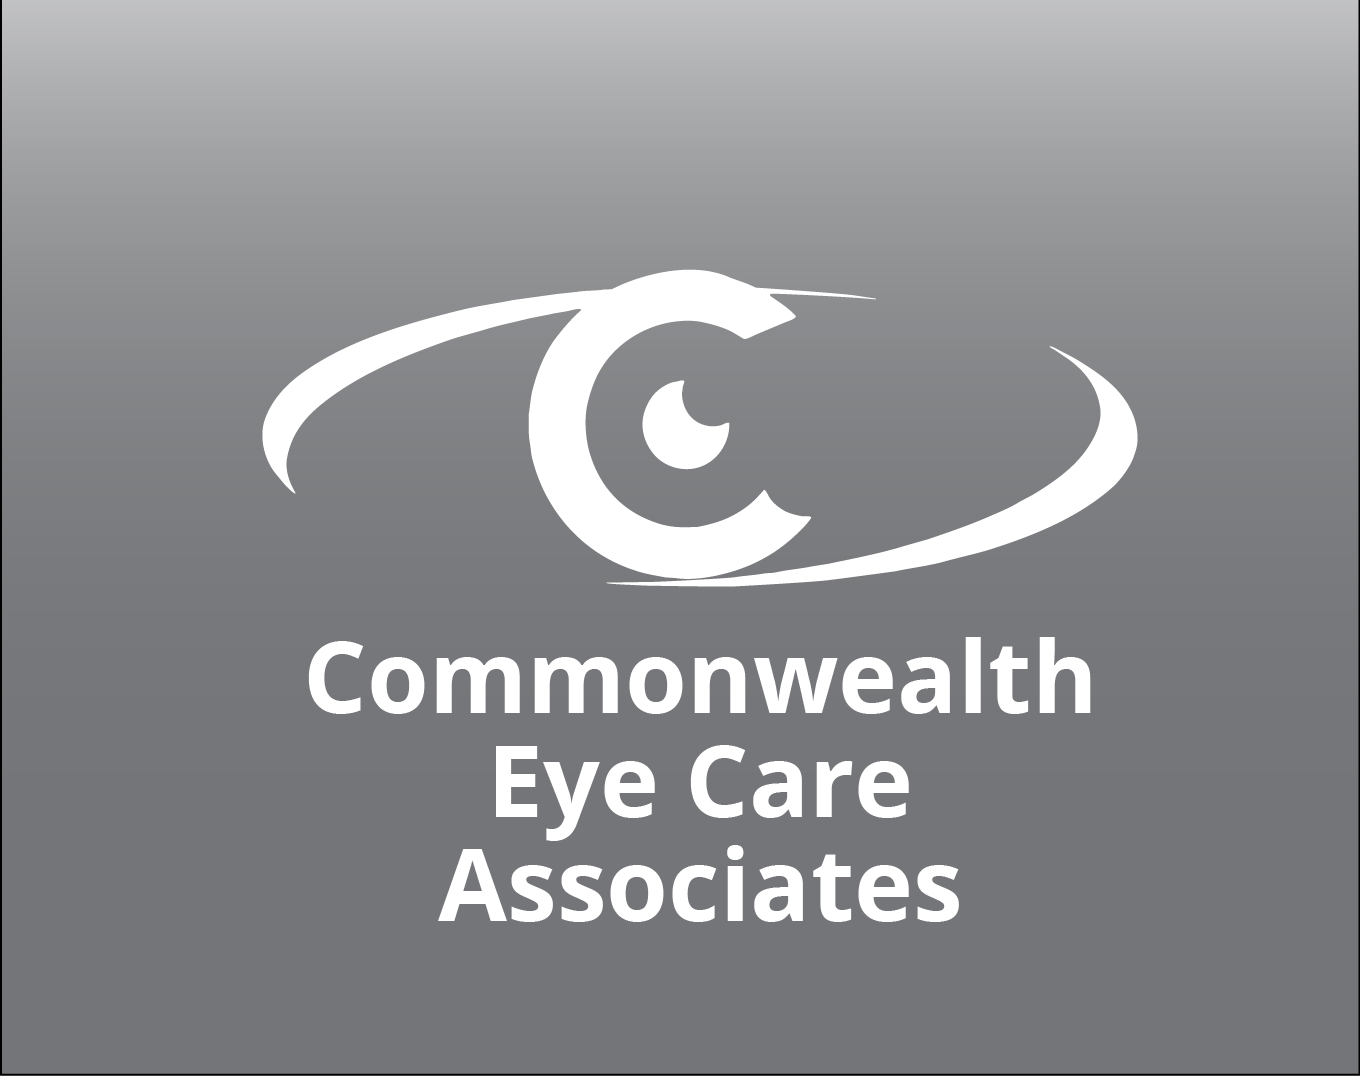 Commonwealth Eye Care Associates Company Logo